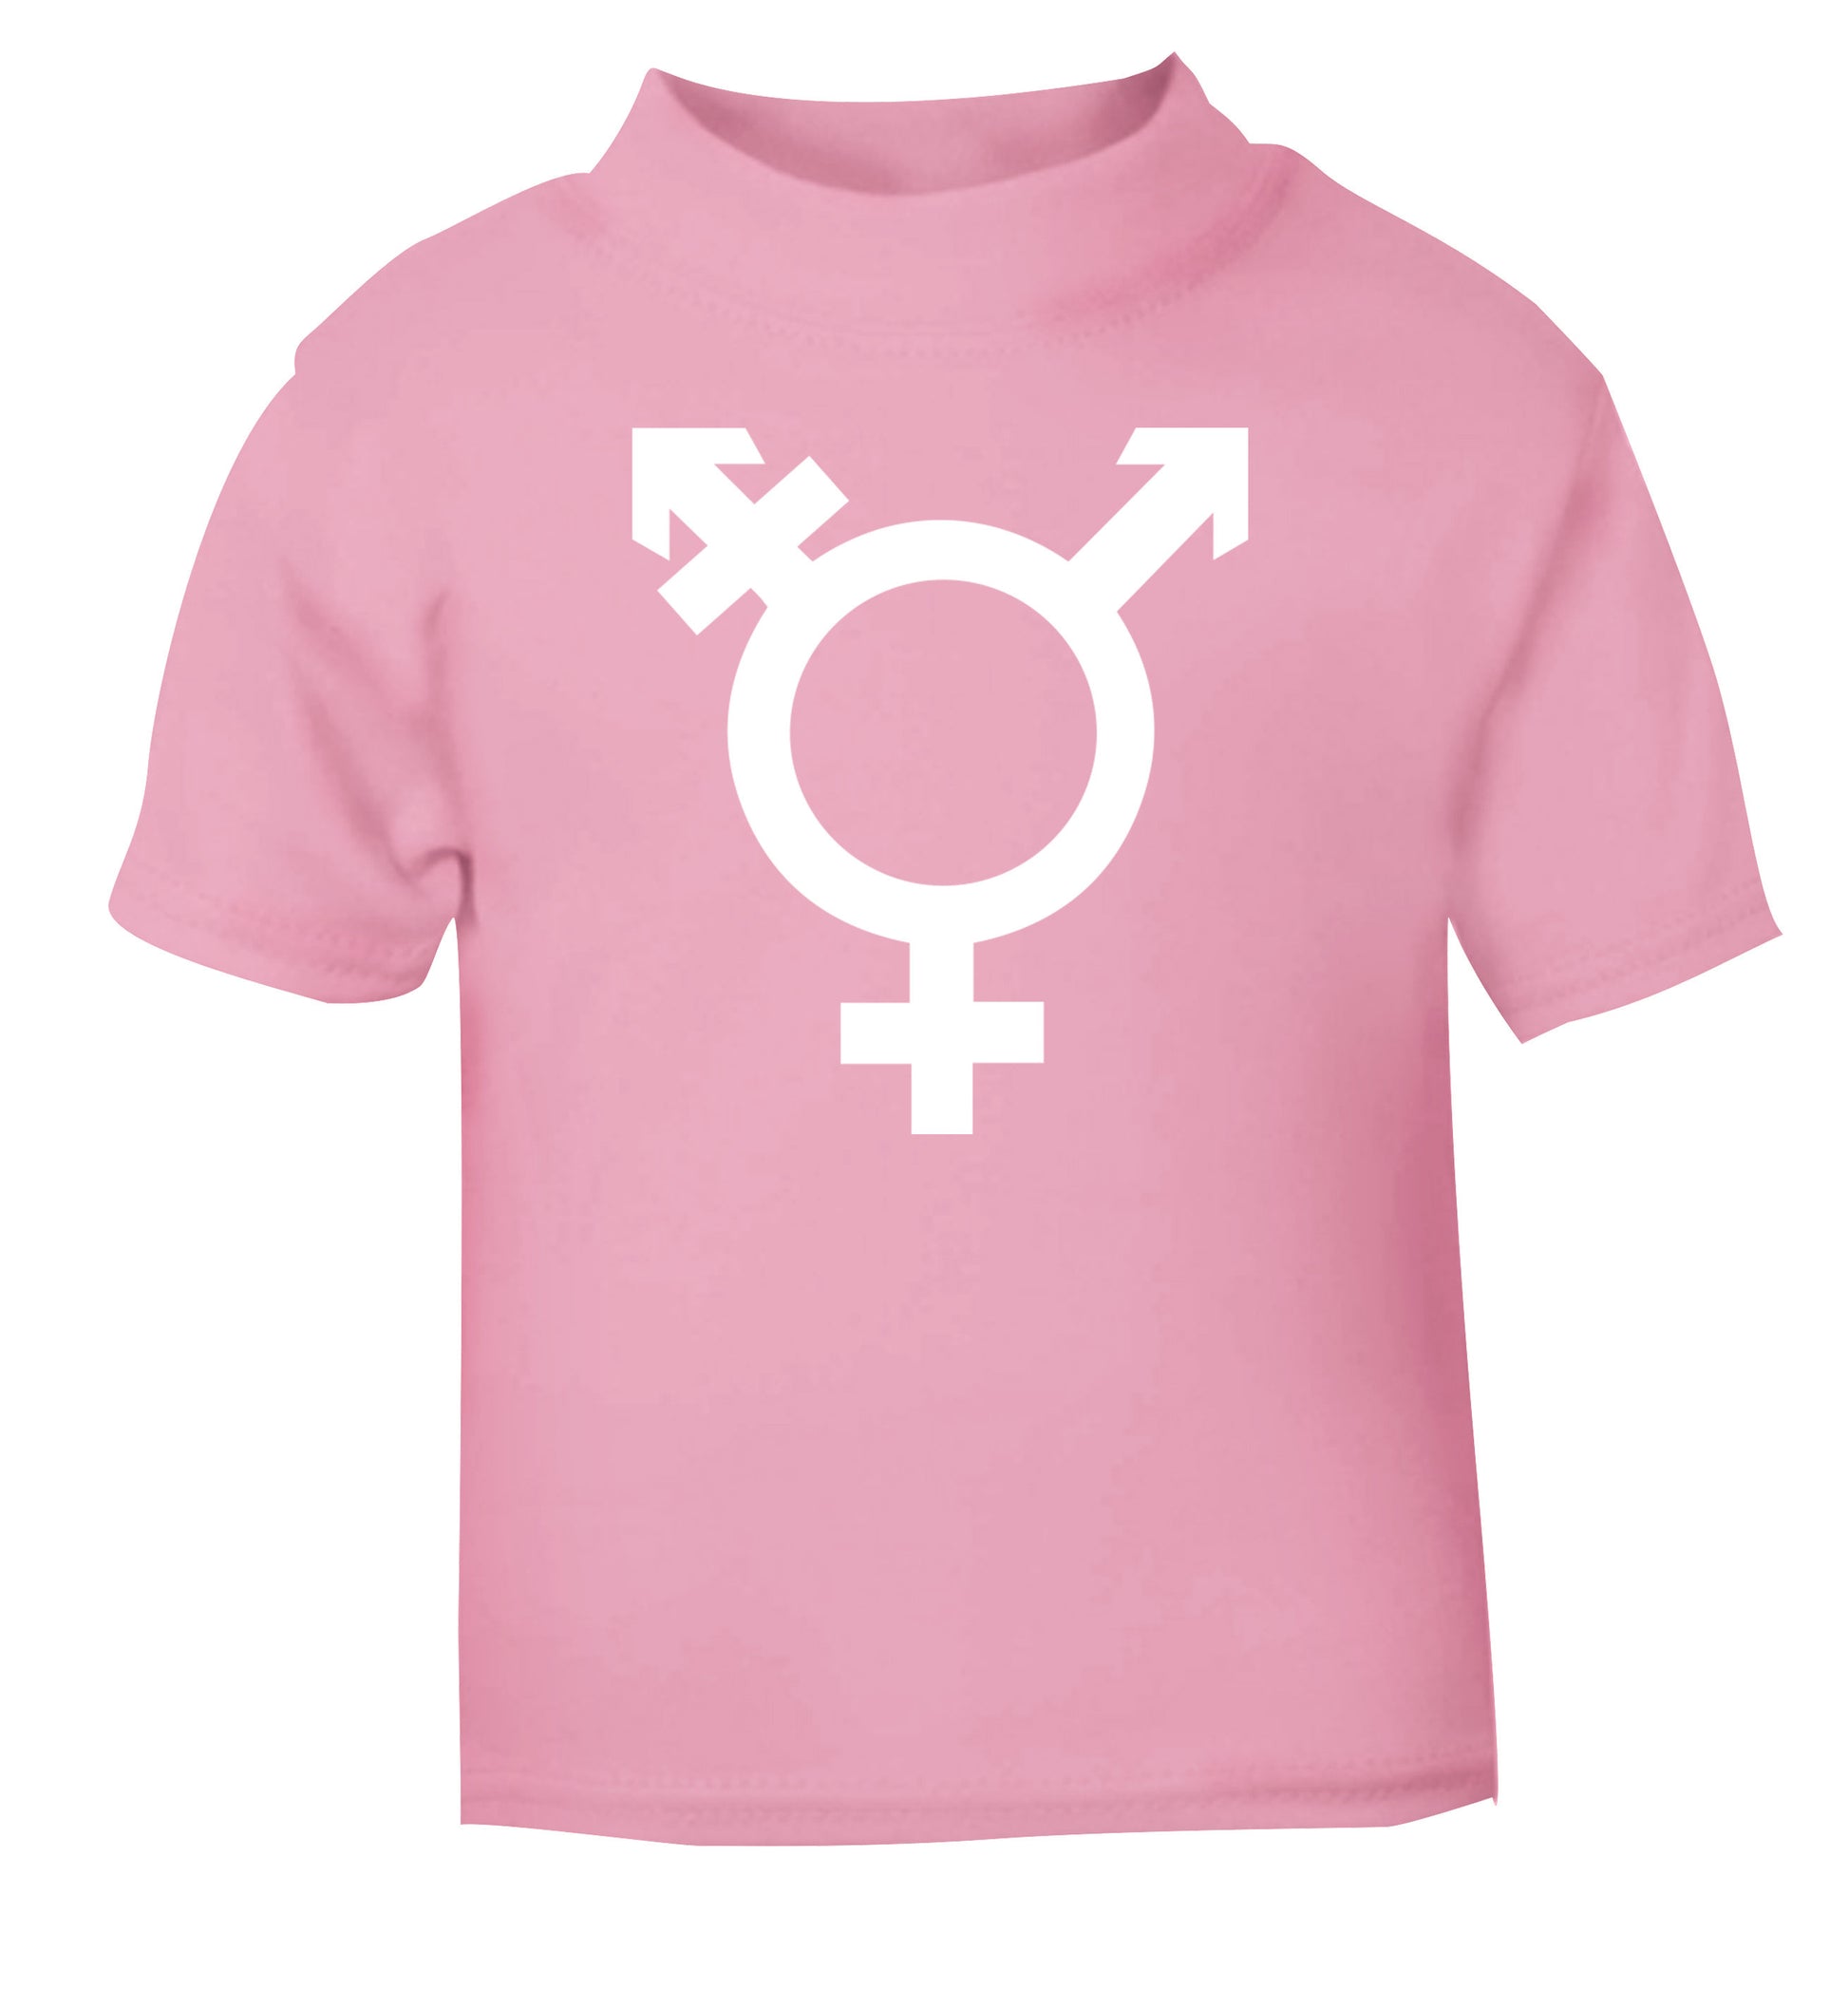 Gender neutral symbol large light pink Baby Toddler Tshirt 2 Years